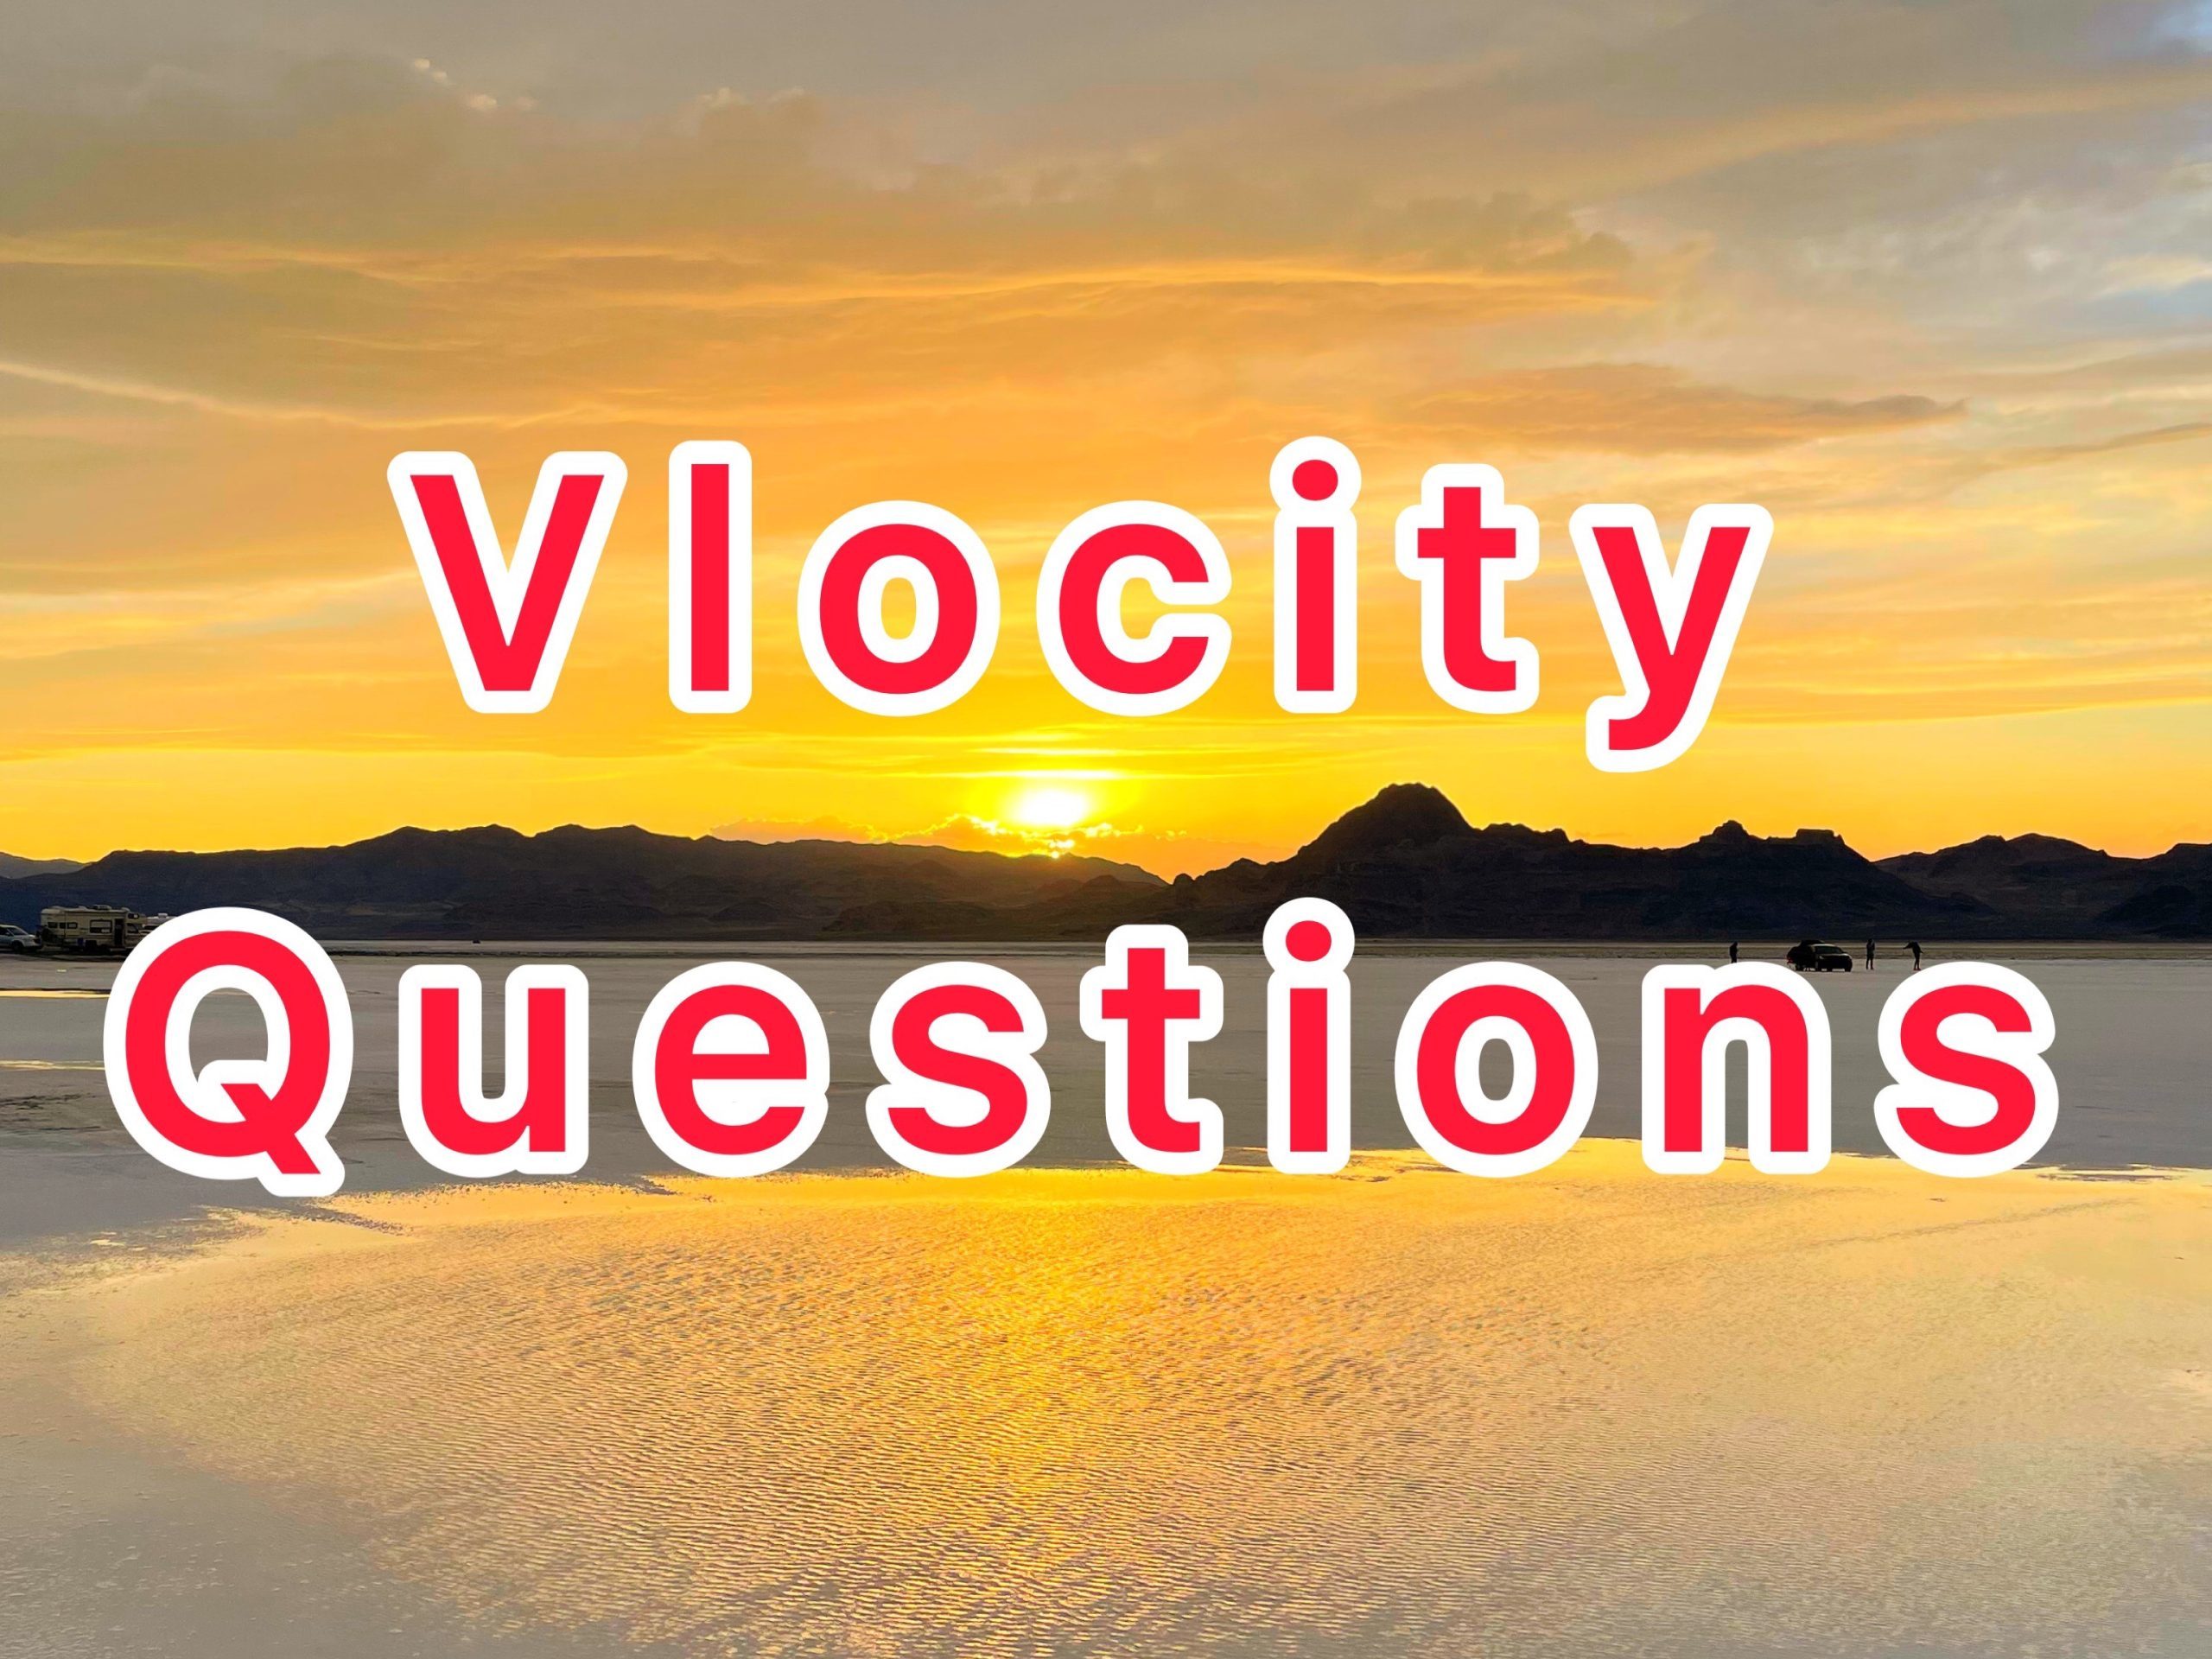 Salesforce Vlocity Interview Questions